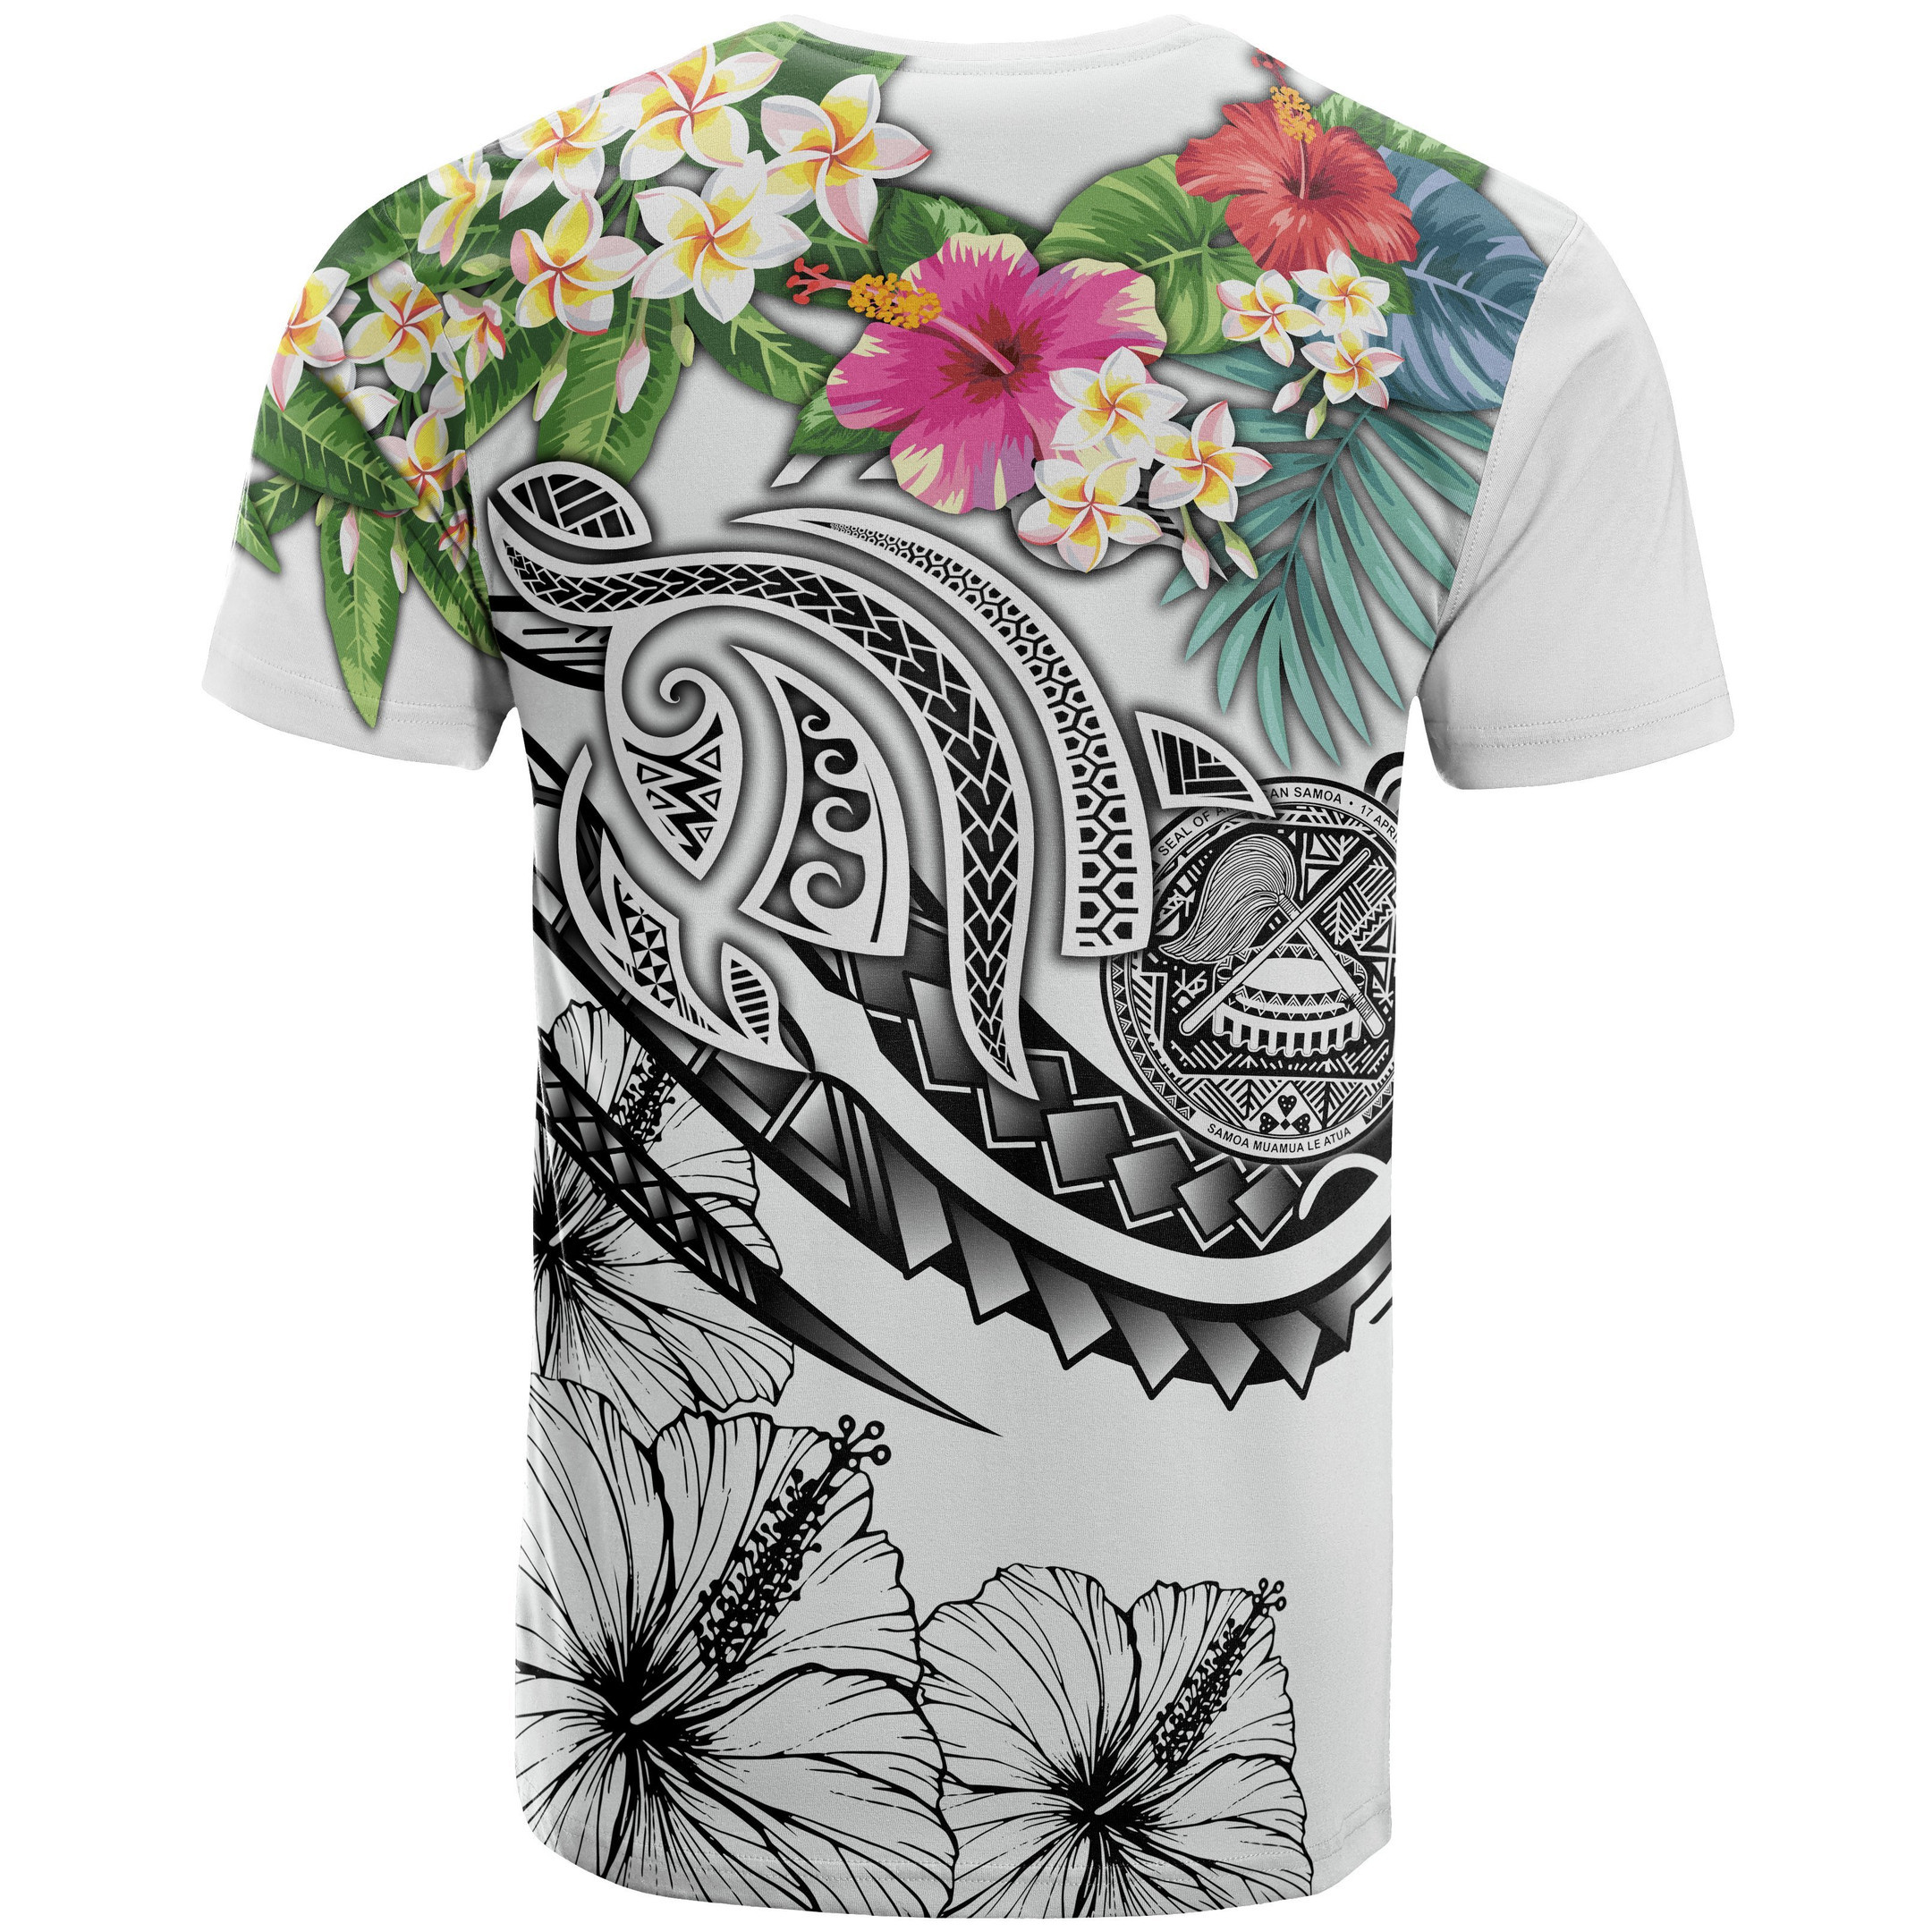 Polynesian American Samoa T-Shirt - Summer Plumeria (White)